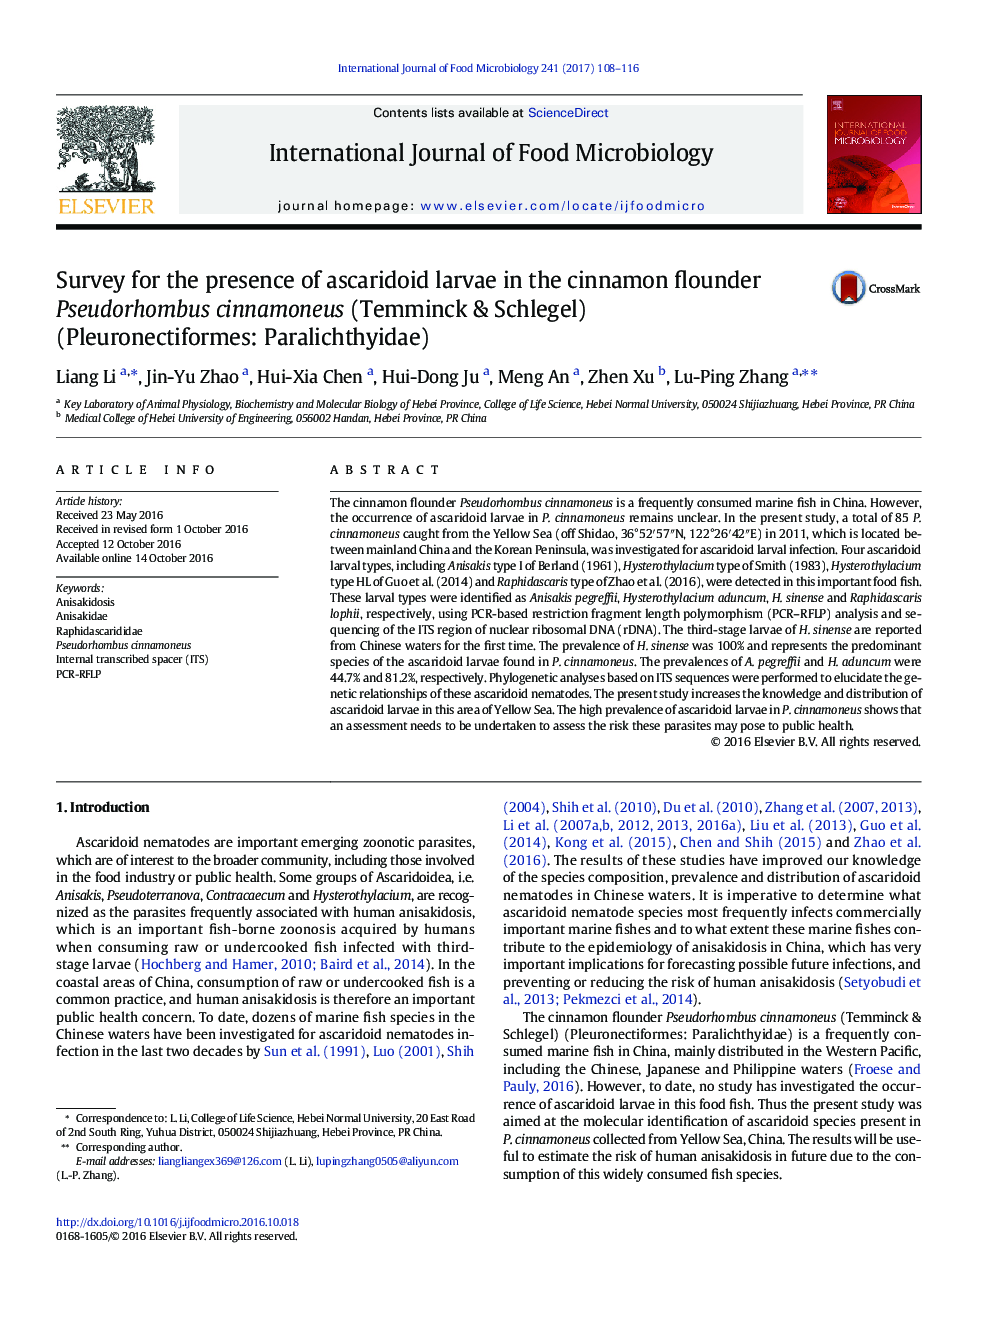 Survey for the presence of ascaridoid larvae in the cinnamon flounder Pseudorhombus cinnamoneus (Temminck & Schlegel) (Pleuronectiformes: Paralichthyidae)